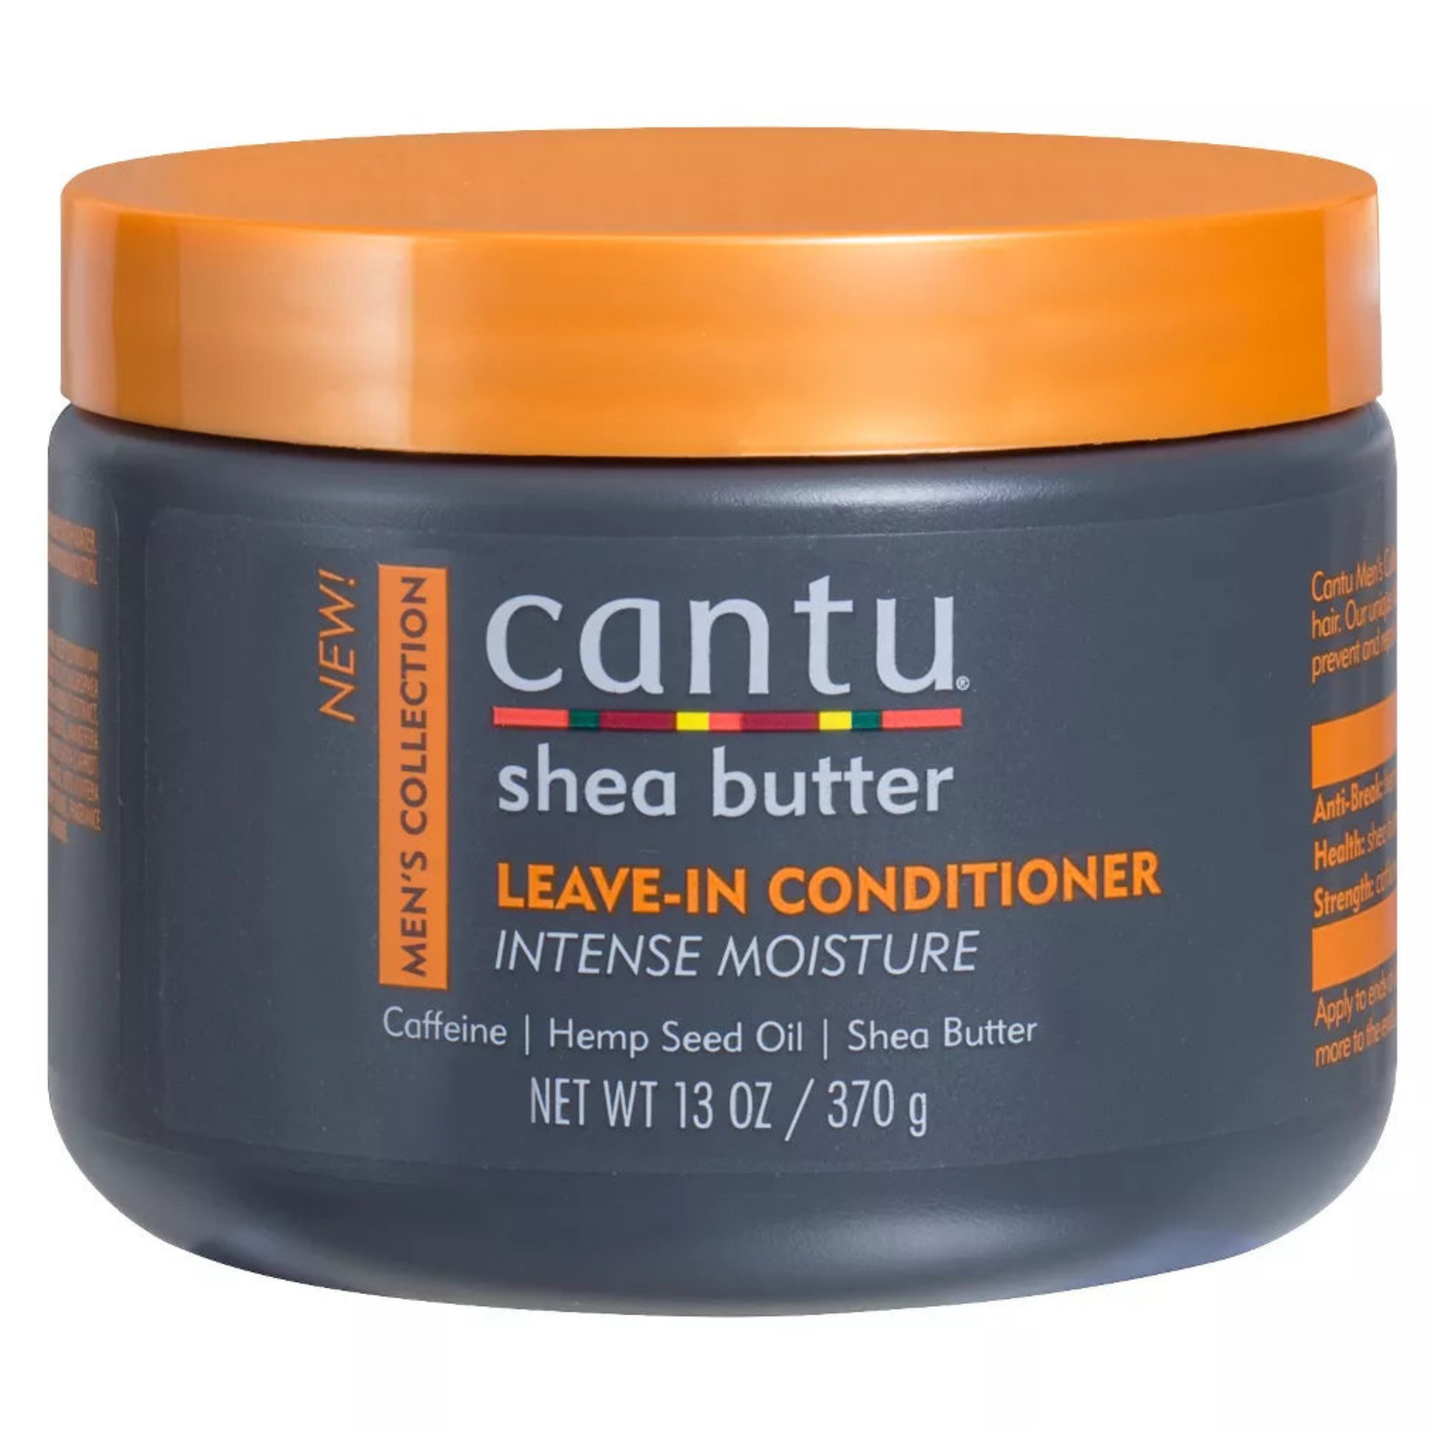 Cantu Men's Shea Butter Leave-In Conditioner - 370g